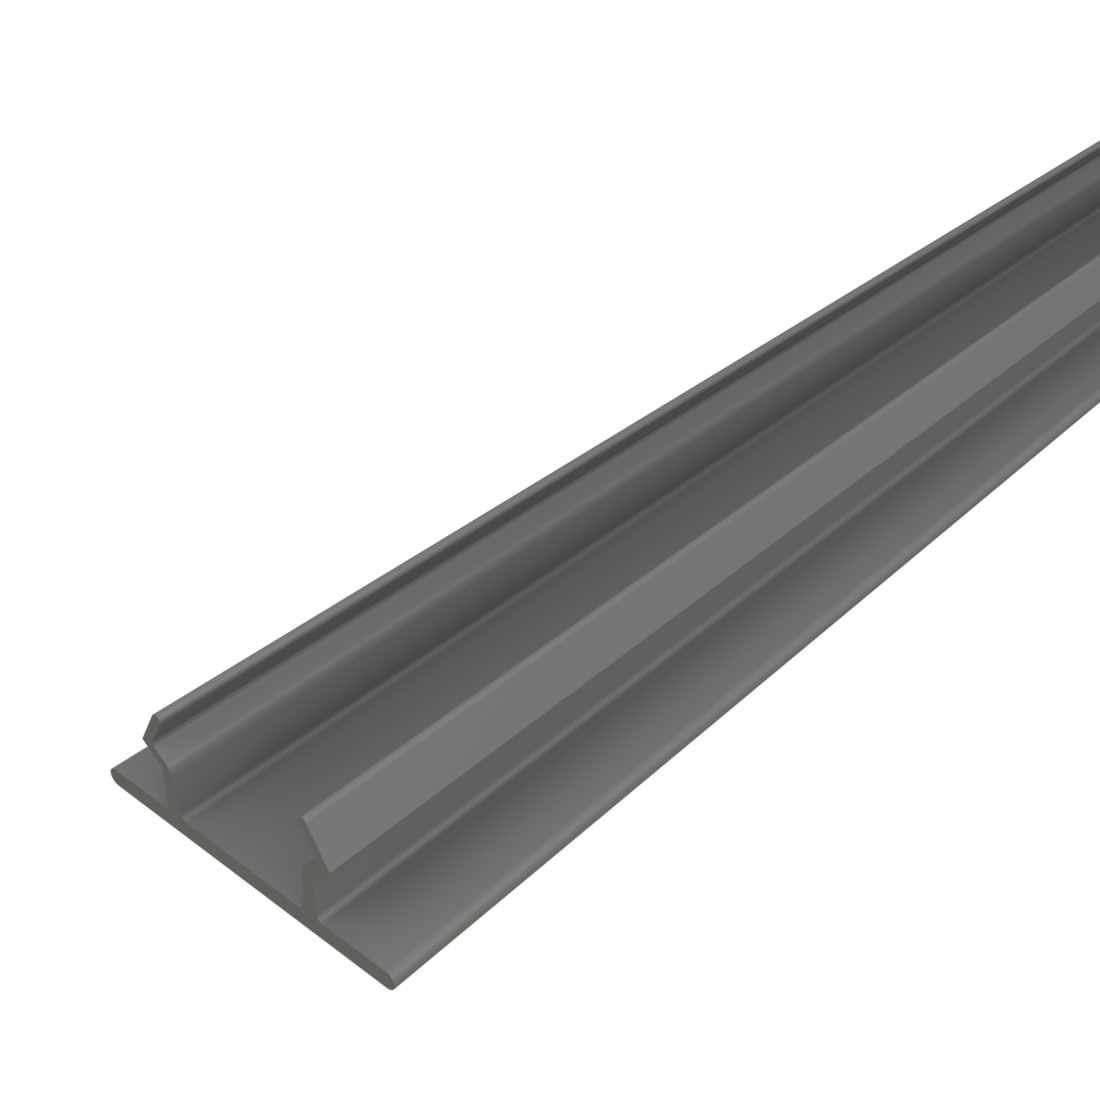 P1184P - PVC Closure Strip